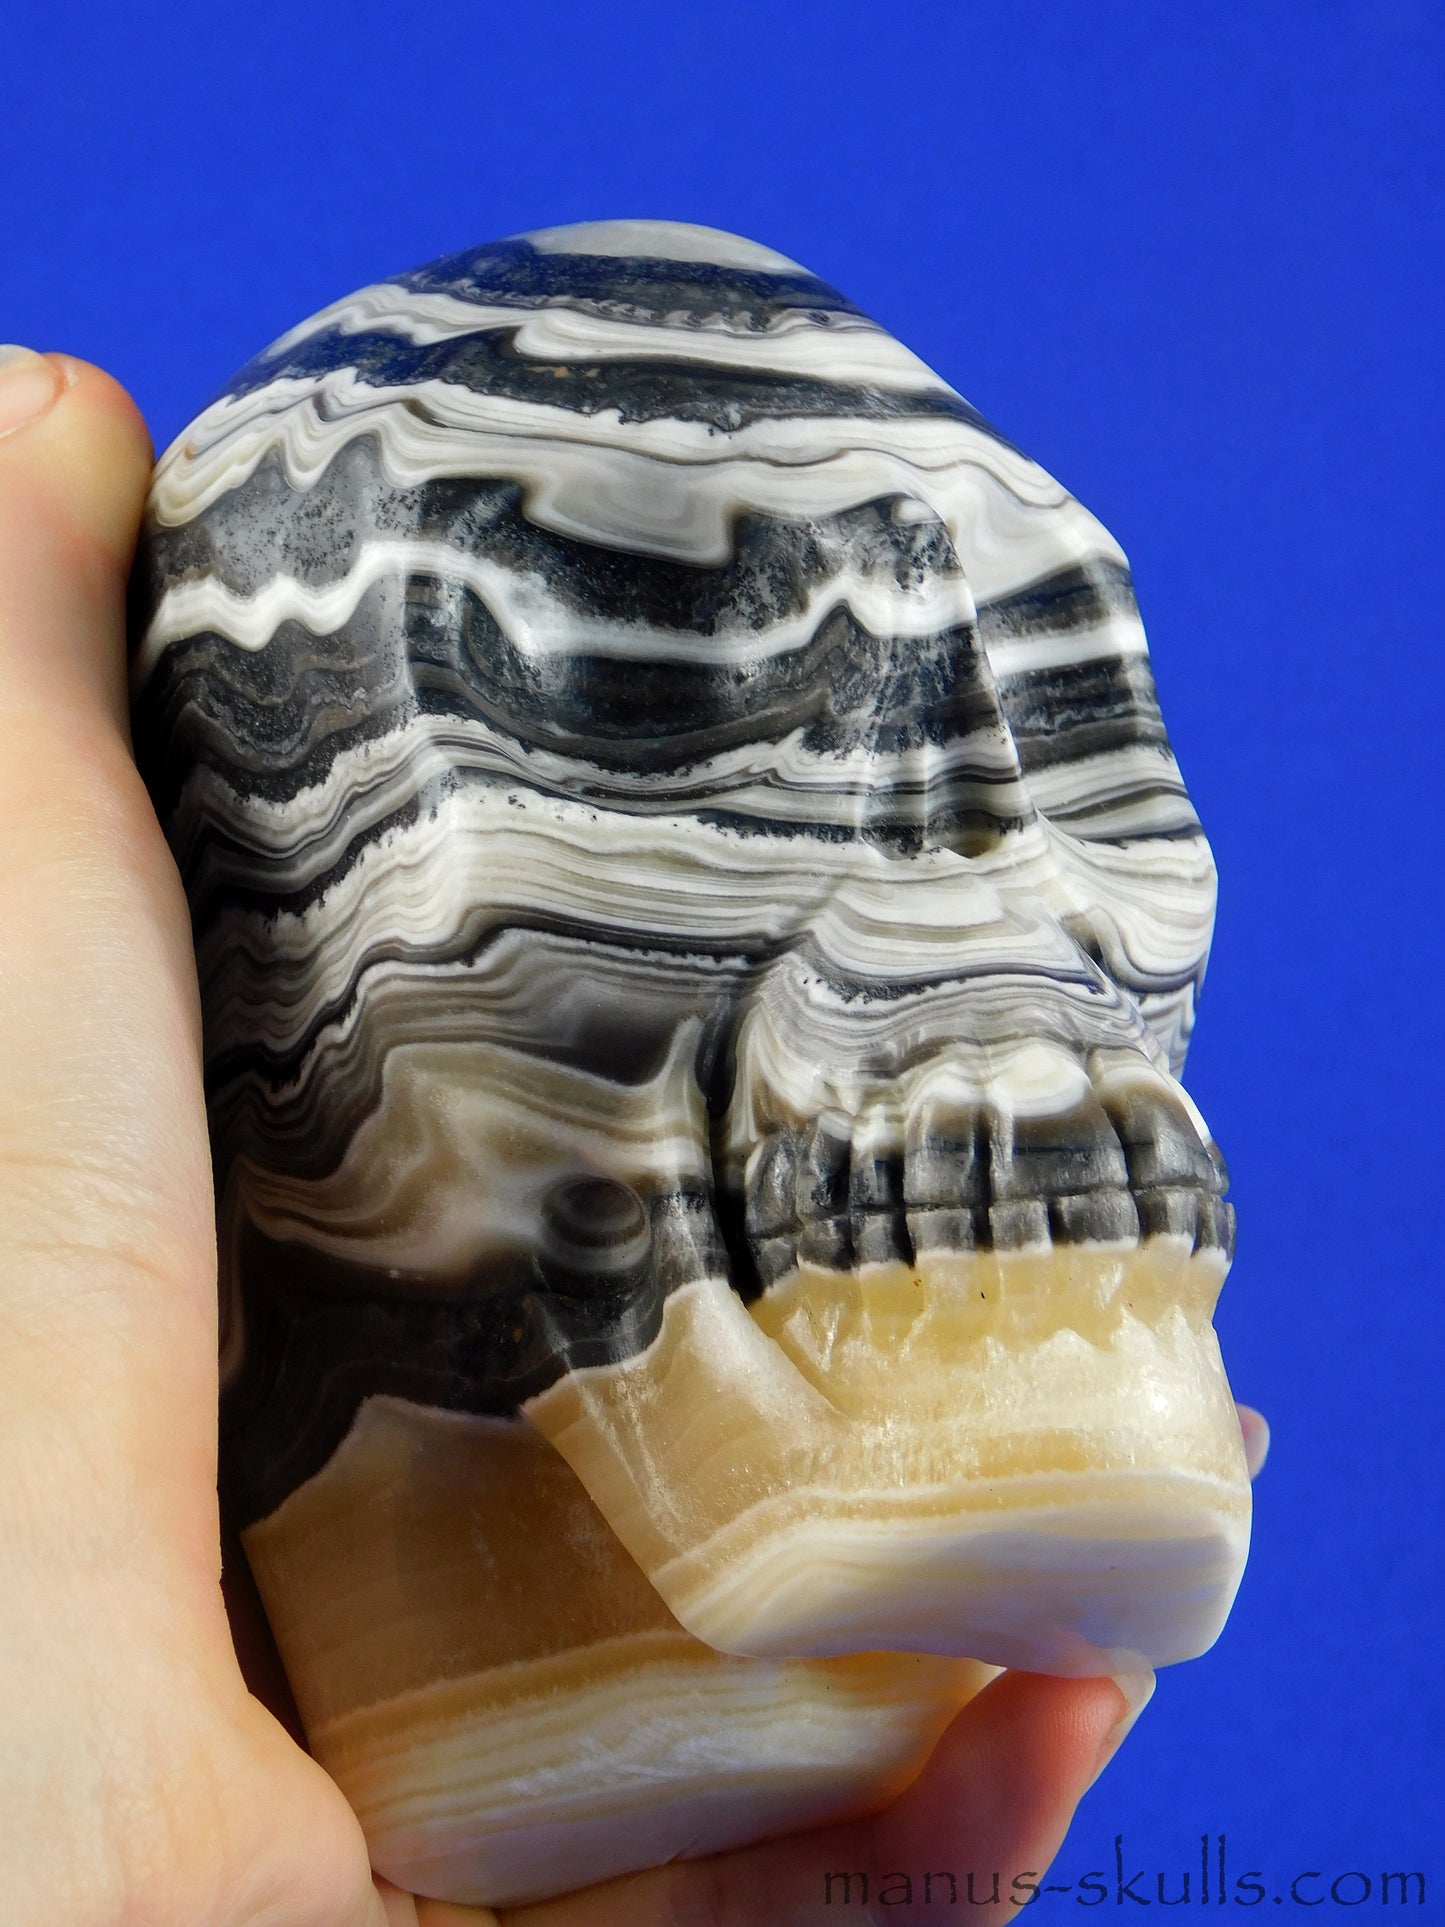 Zebra Calcite Skull